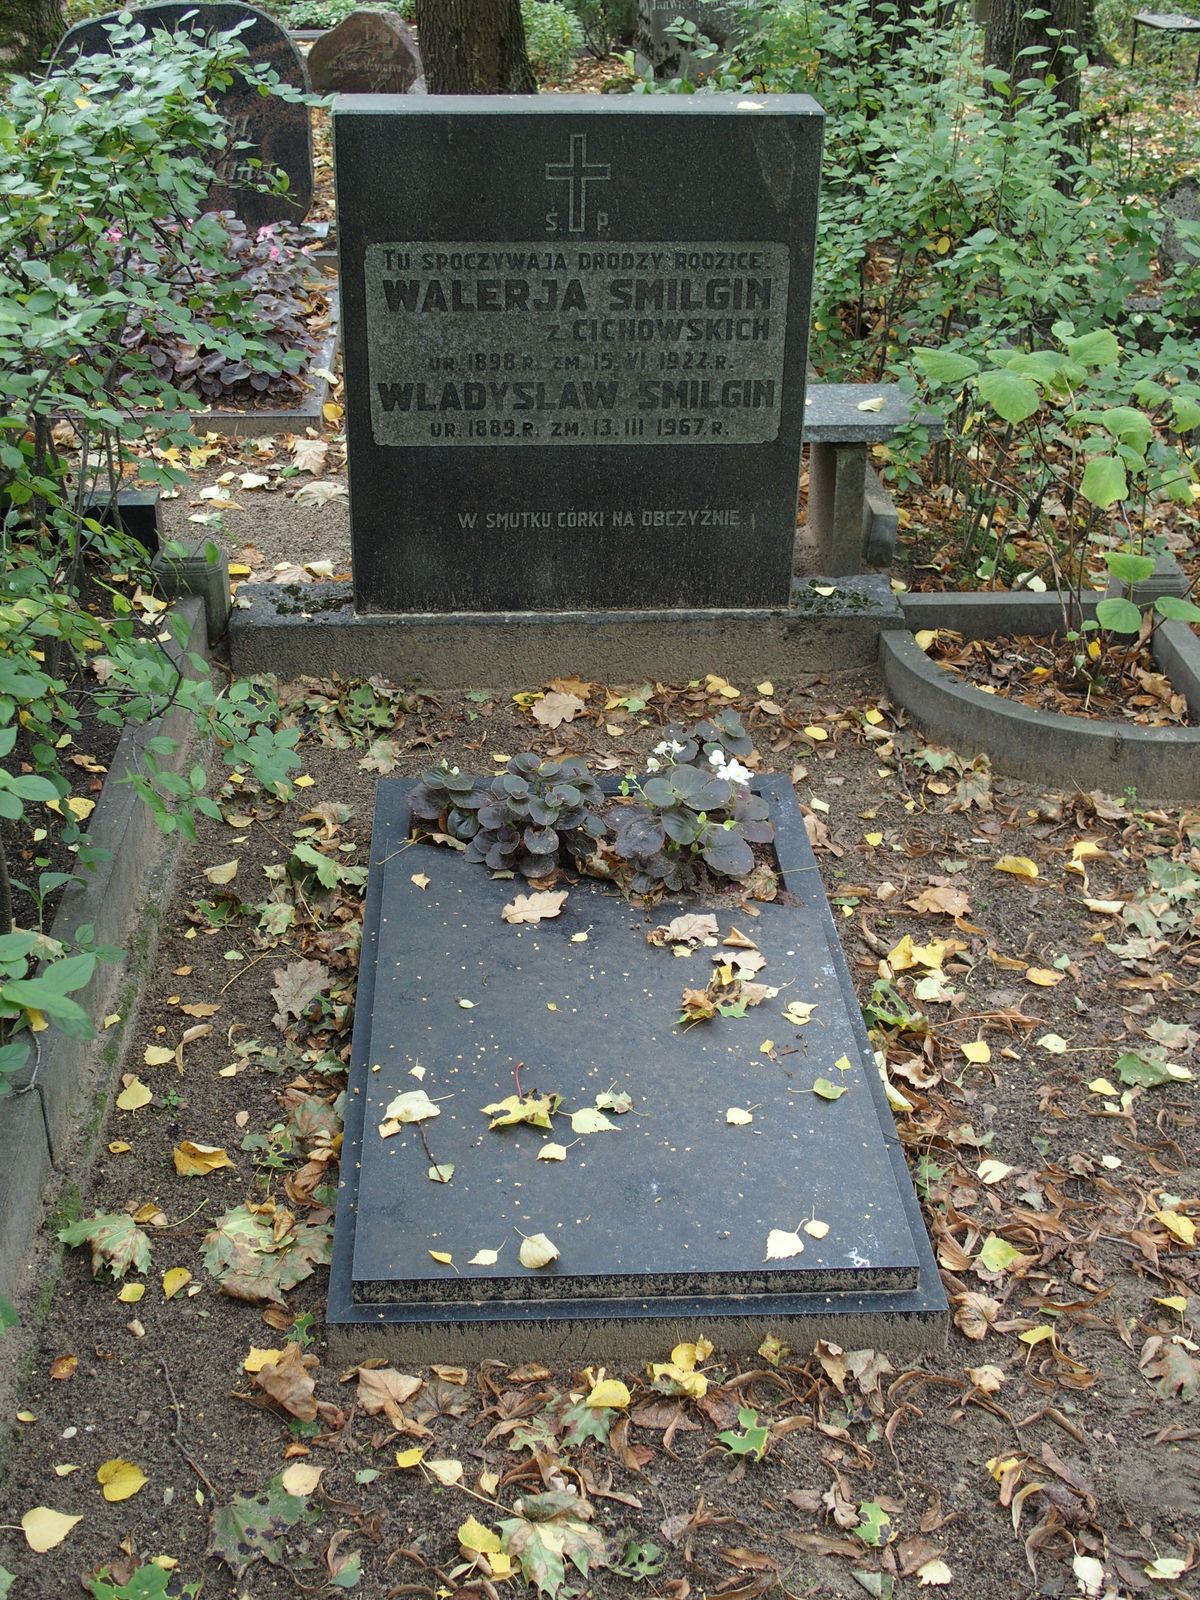 Tombstone of Valeria Smilgin and Vladislav Smilgin, St Michael's cemetery in Riga, as of 2021.